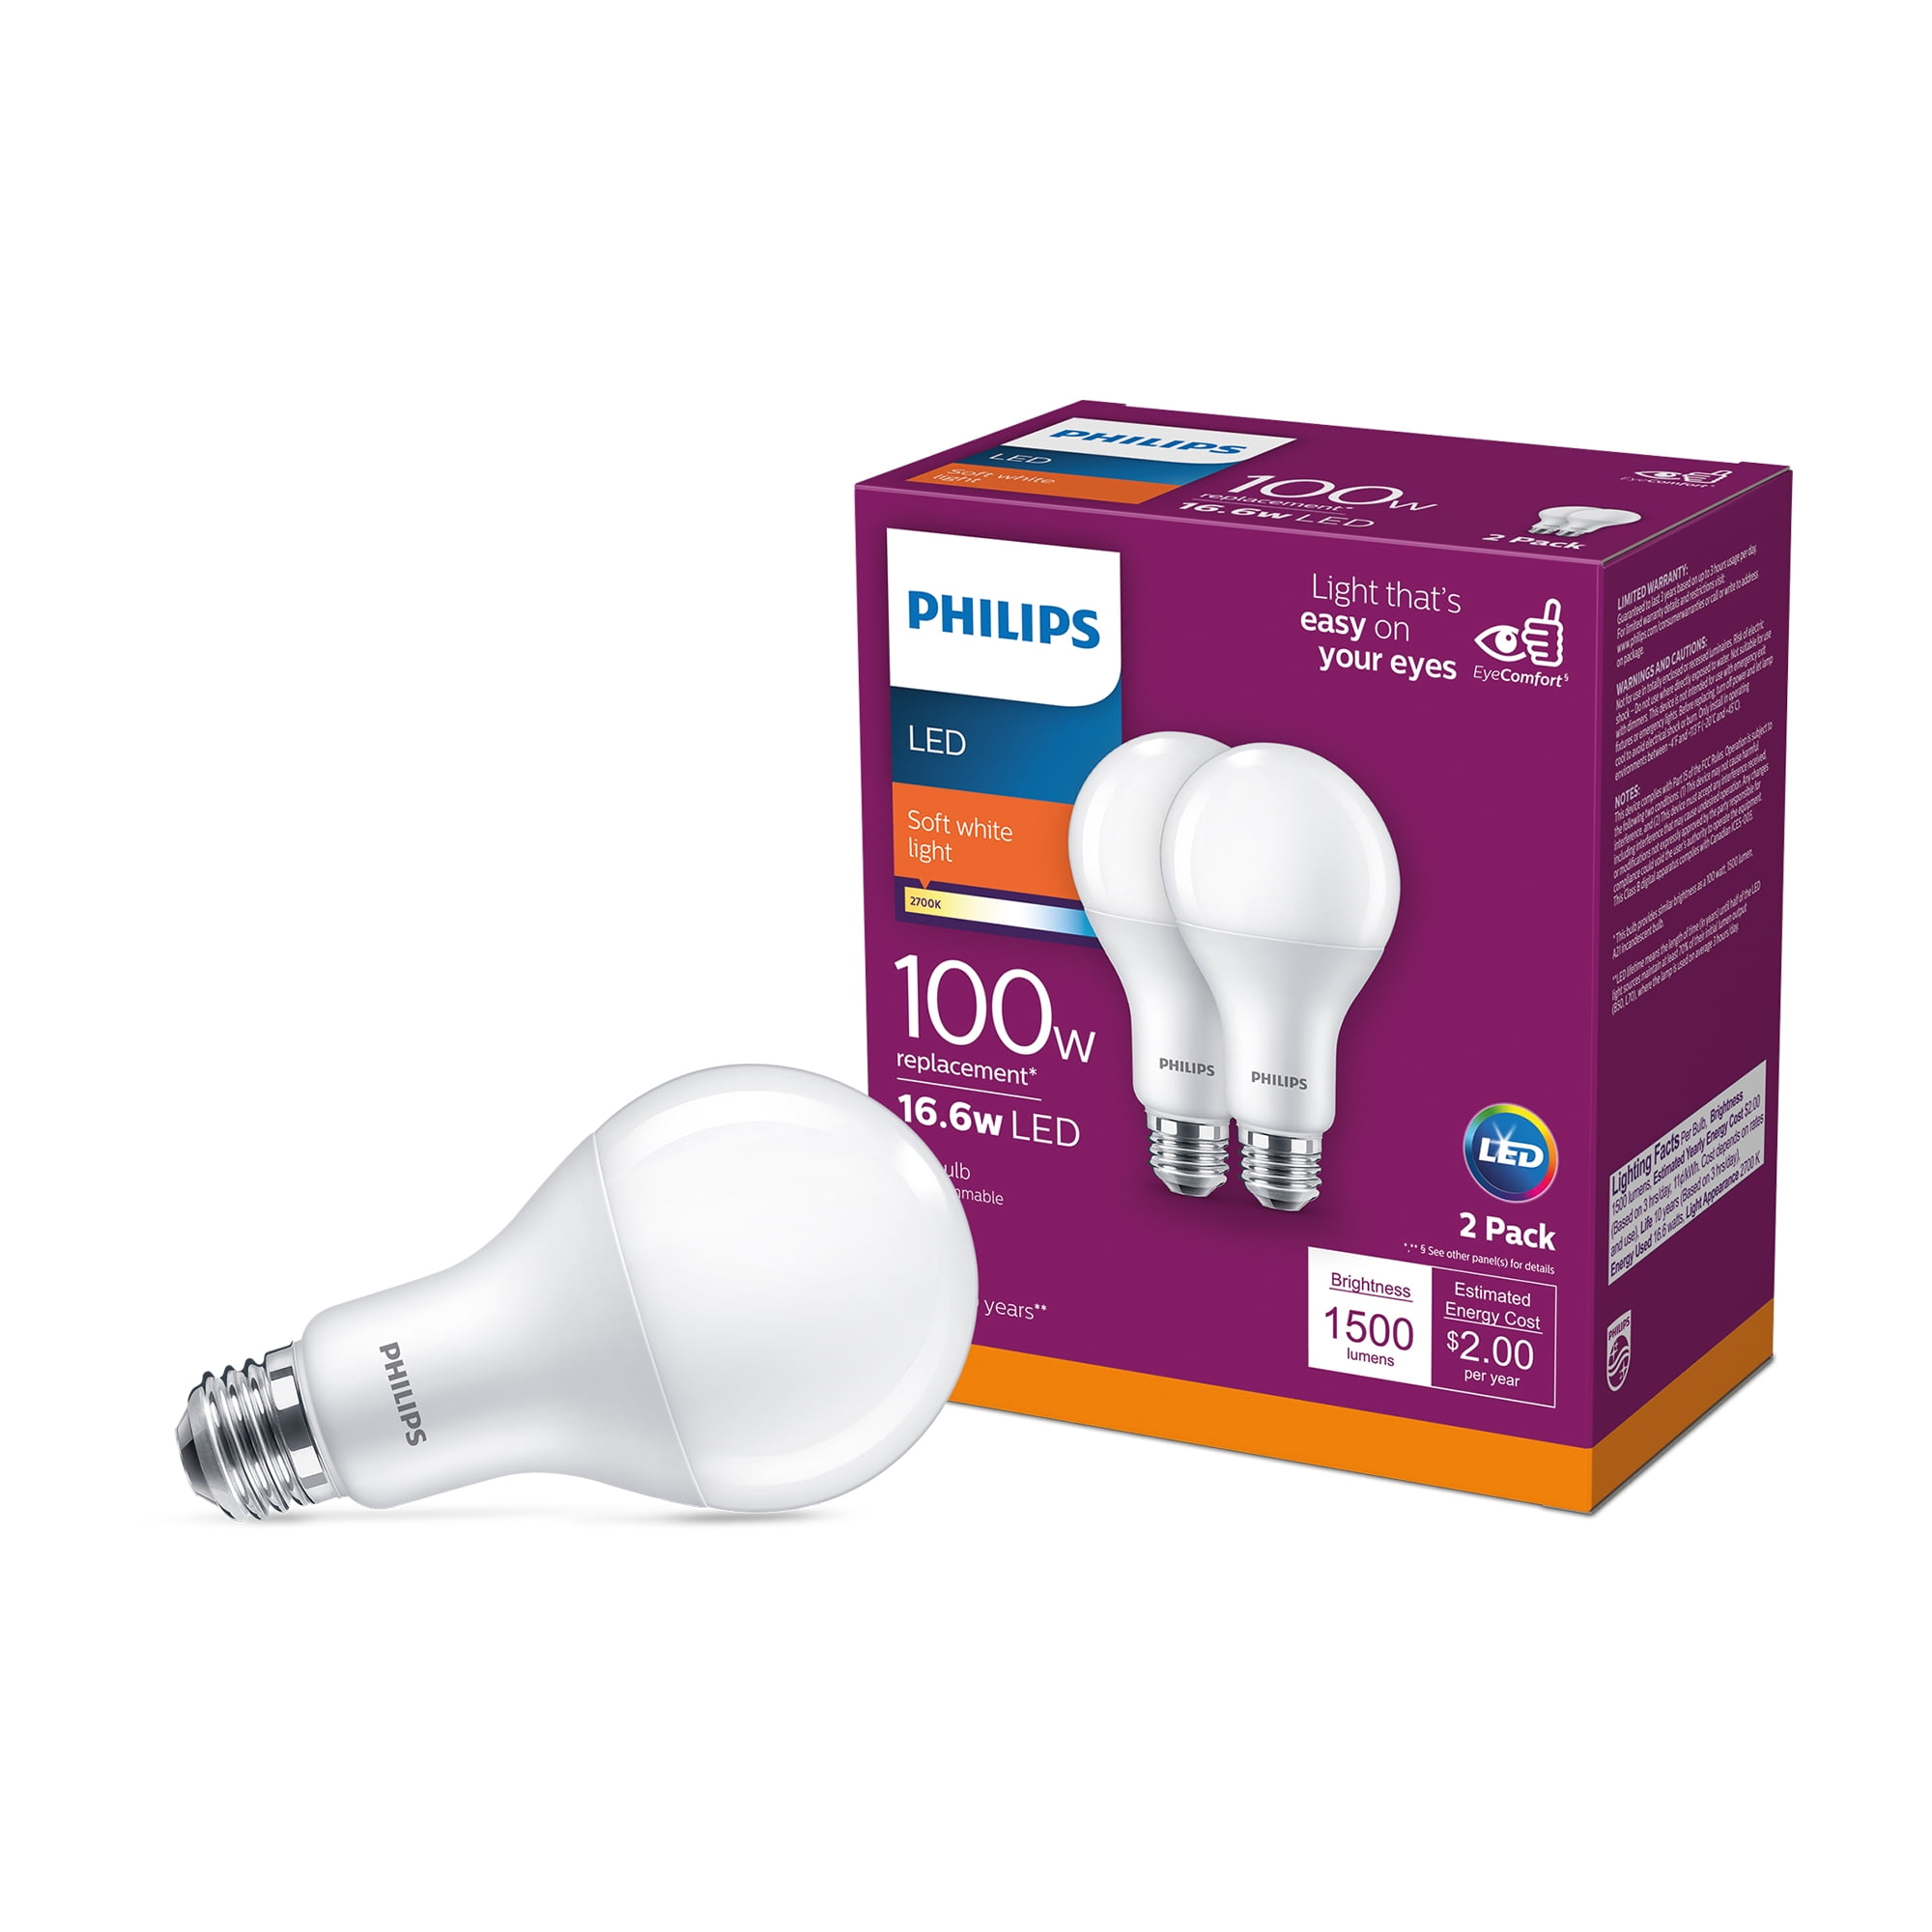 Philips LED 100-Watt A21 General Purpose Light Soft White, Non-Dimmable, E26 Medium (2-Pack) -